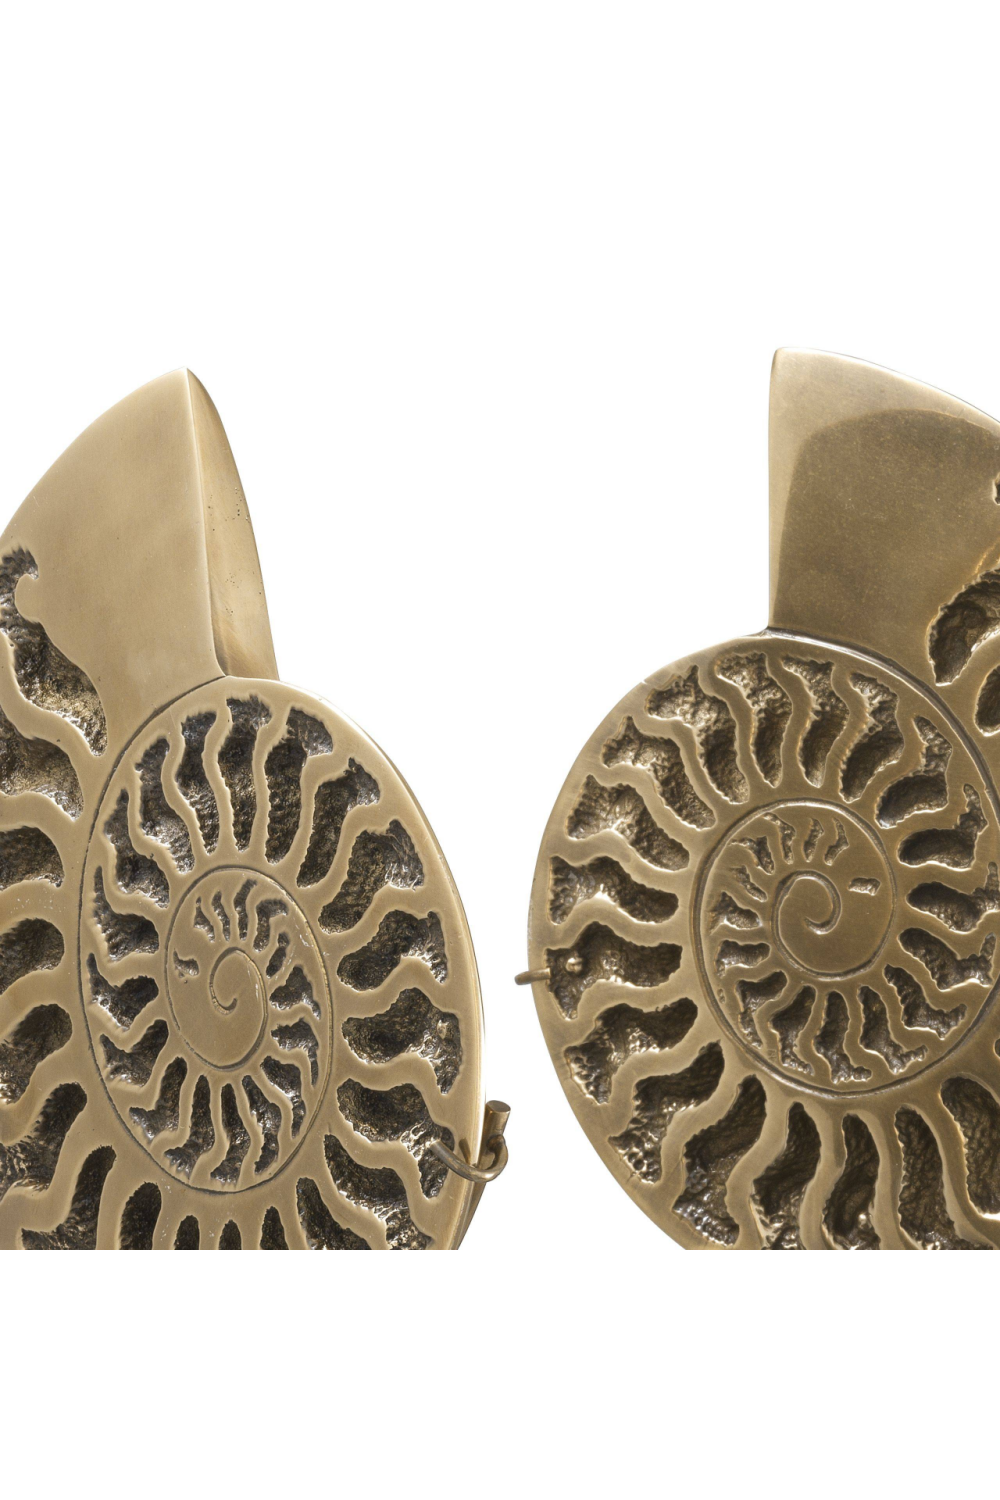 Vintage Brass Object Set of 2 | Eichholtz Ammonite | OROA.com